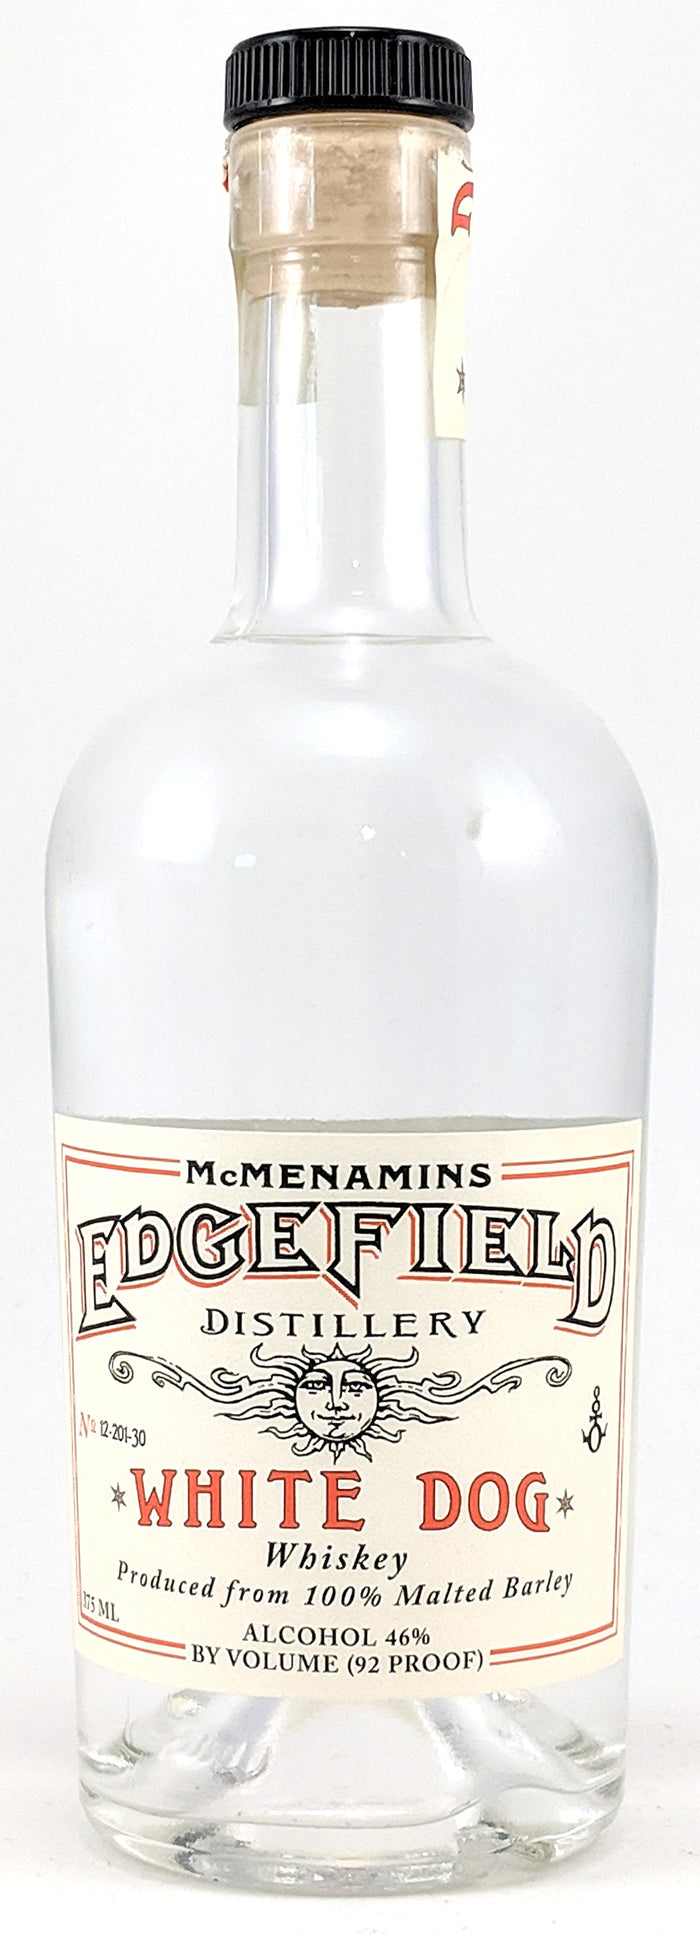 Edgefield Distillery White Dog Whiskey